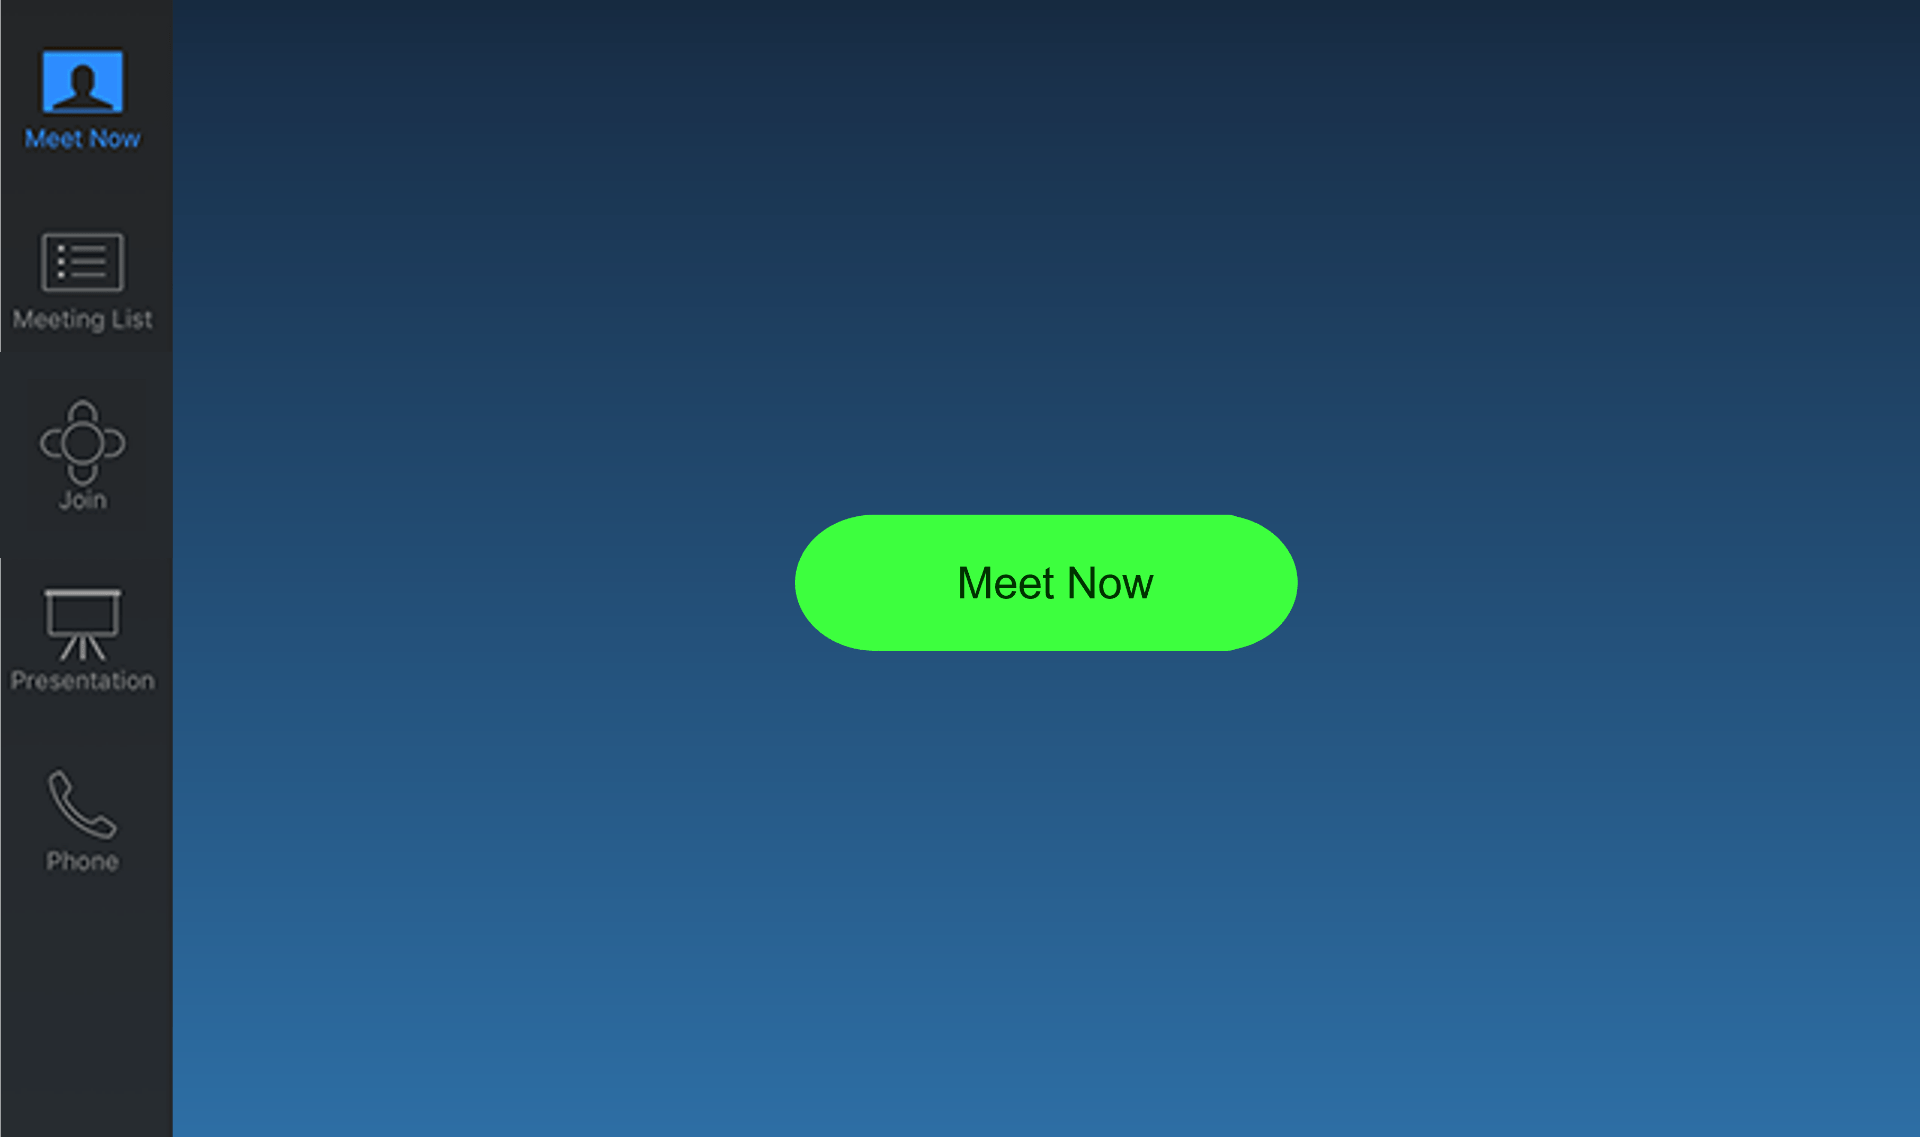 Image of Controller Screen: Meet Now button